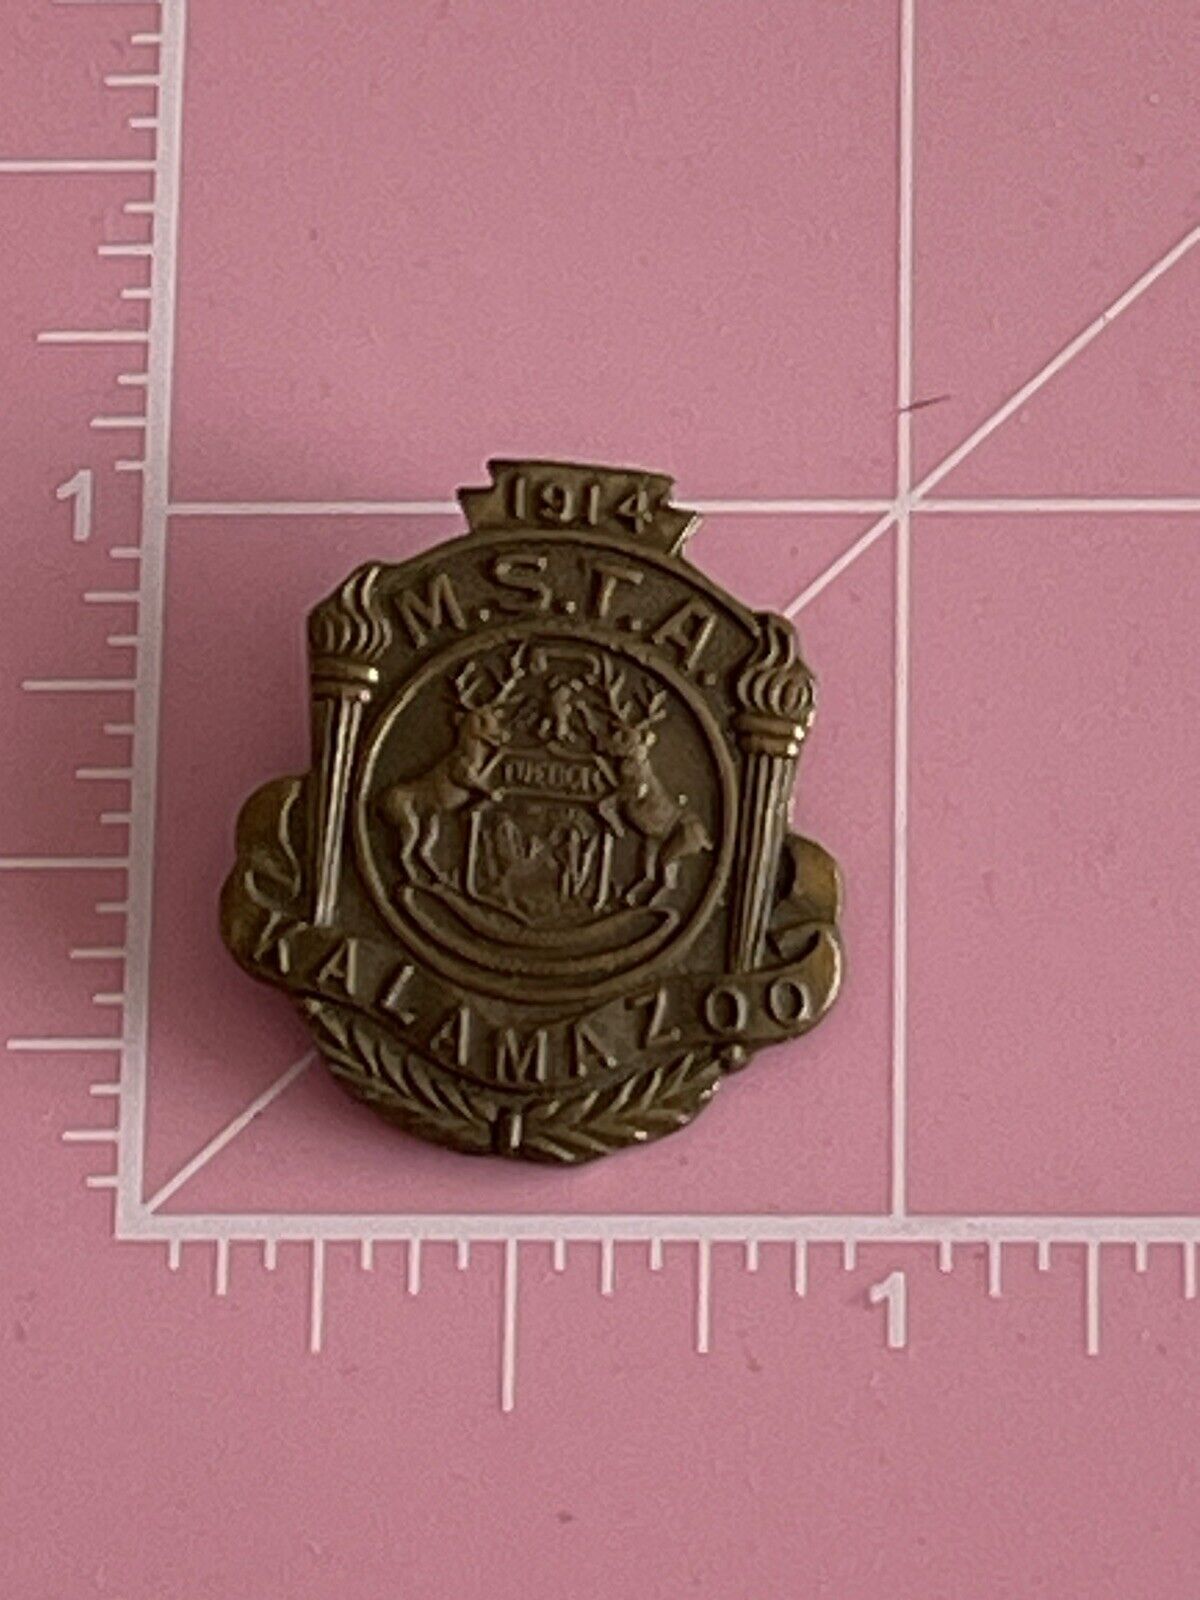 Rare M.S.T.A. Pin 1914 Kalamazoo 